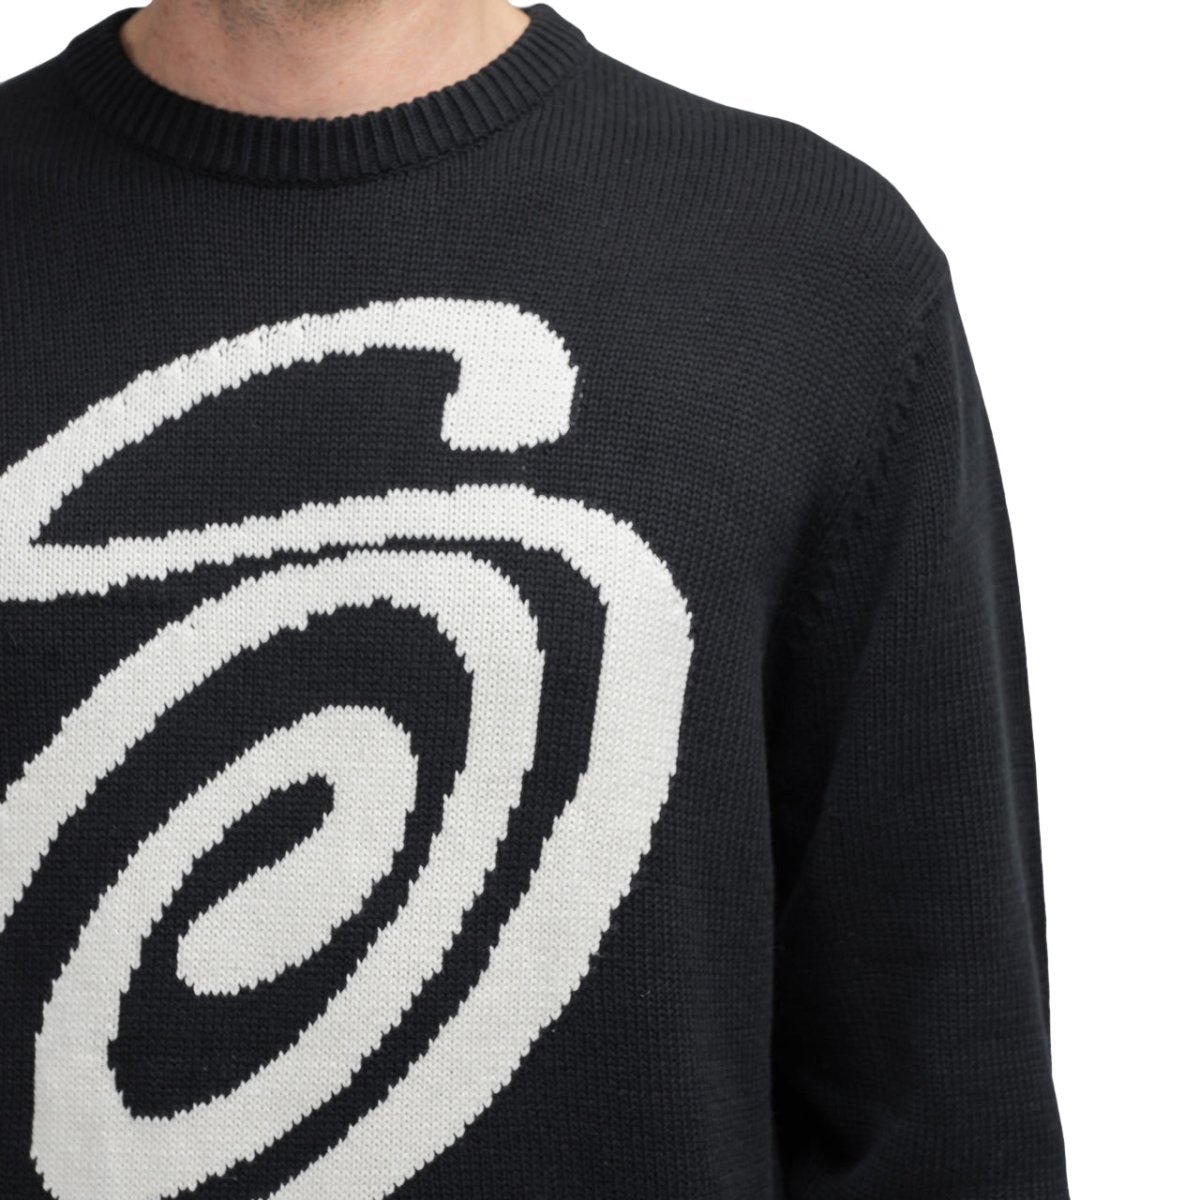 Stüssy Curly S Sweater (Black / White) 117073-0001 – Allike Store